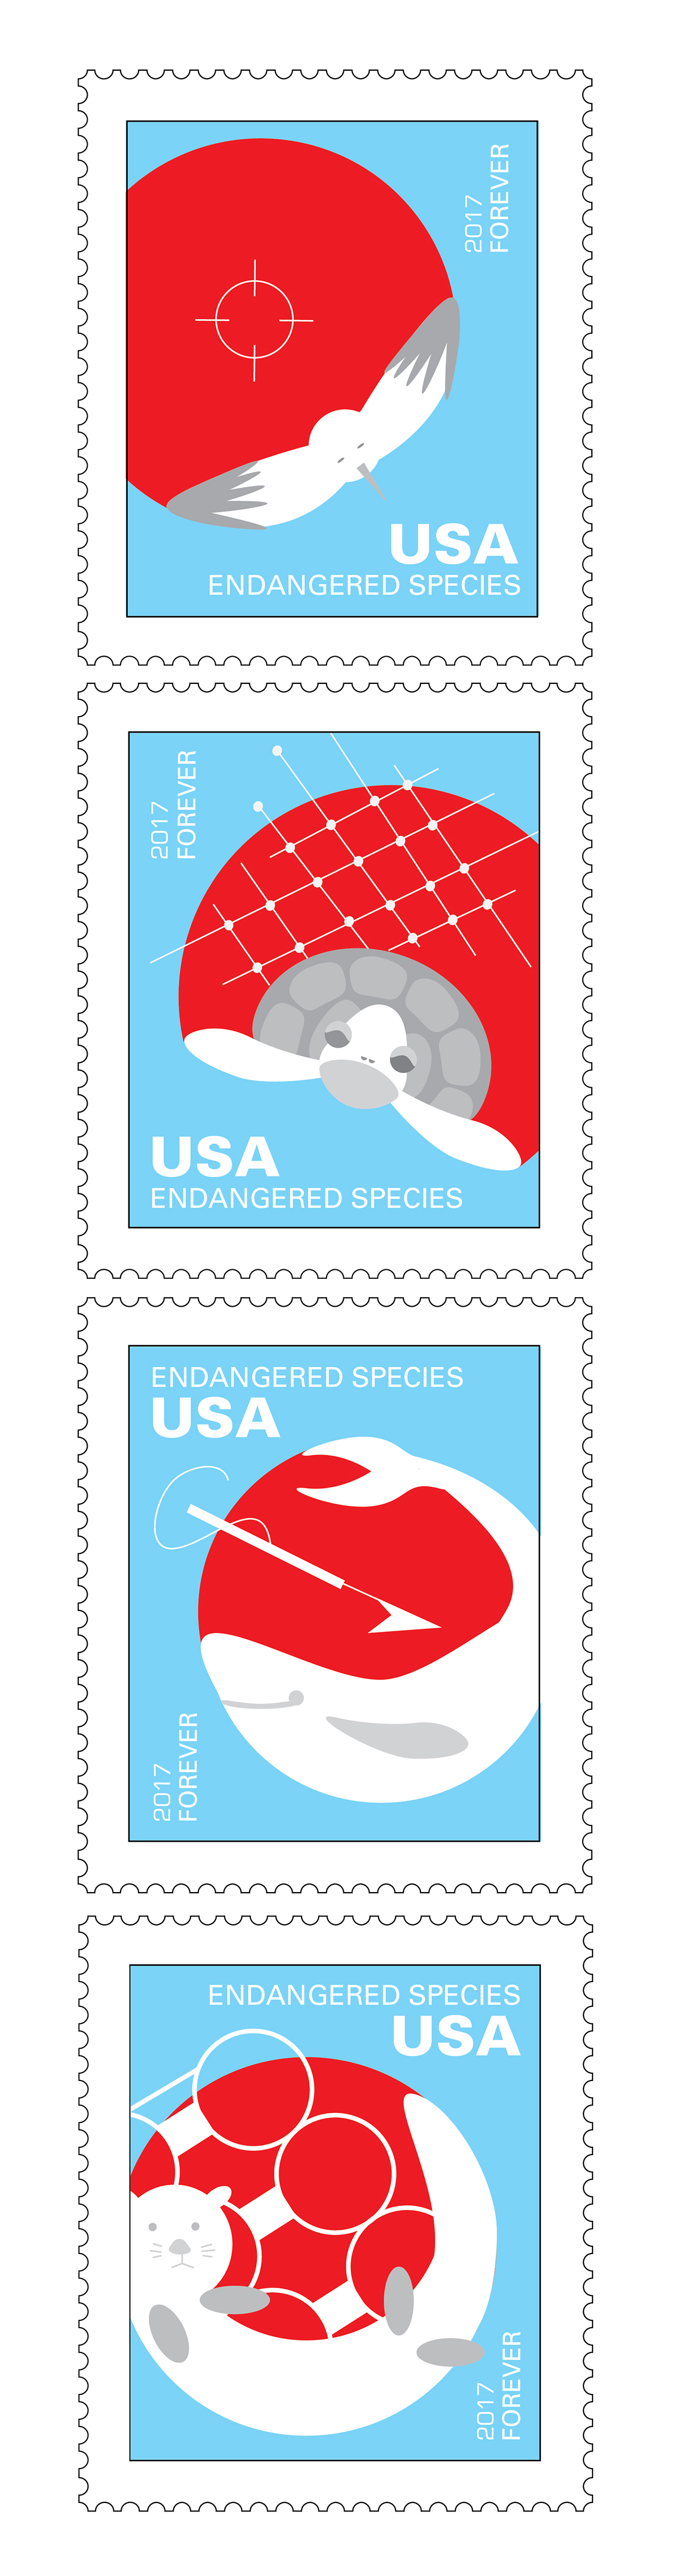 endangered species stamps